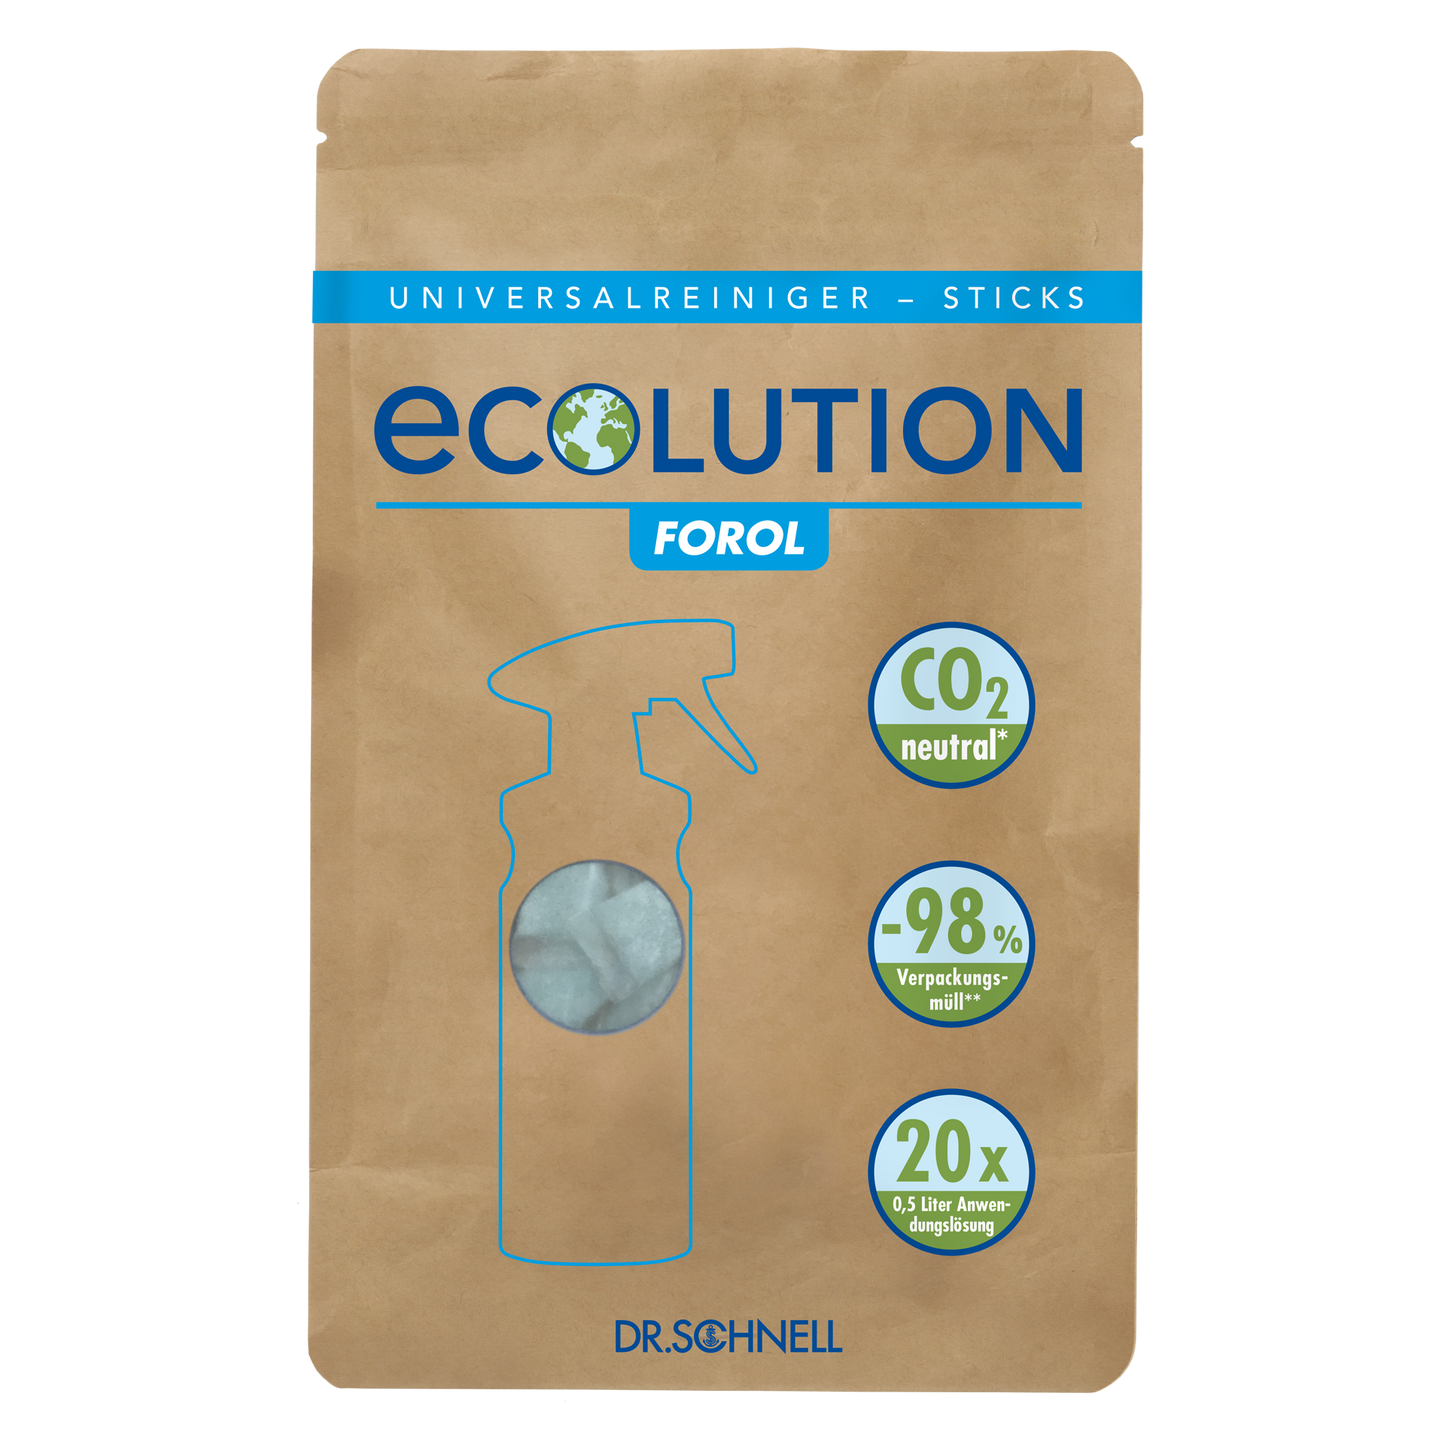 DR.SCHNELL Ecolution Forol 3-gram Sticks, 20 stk